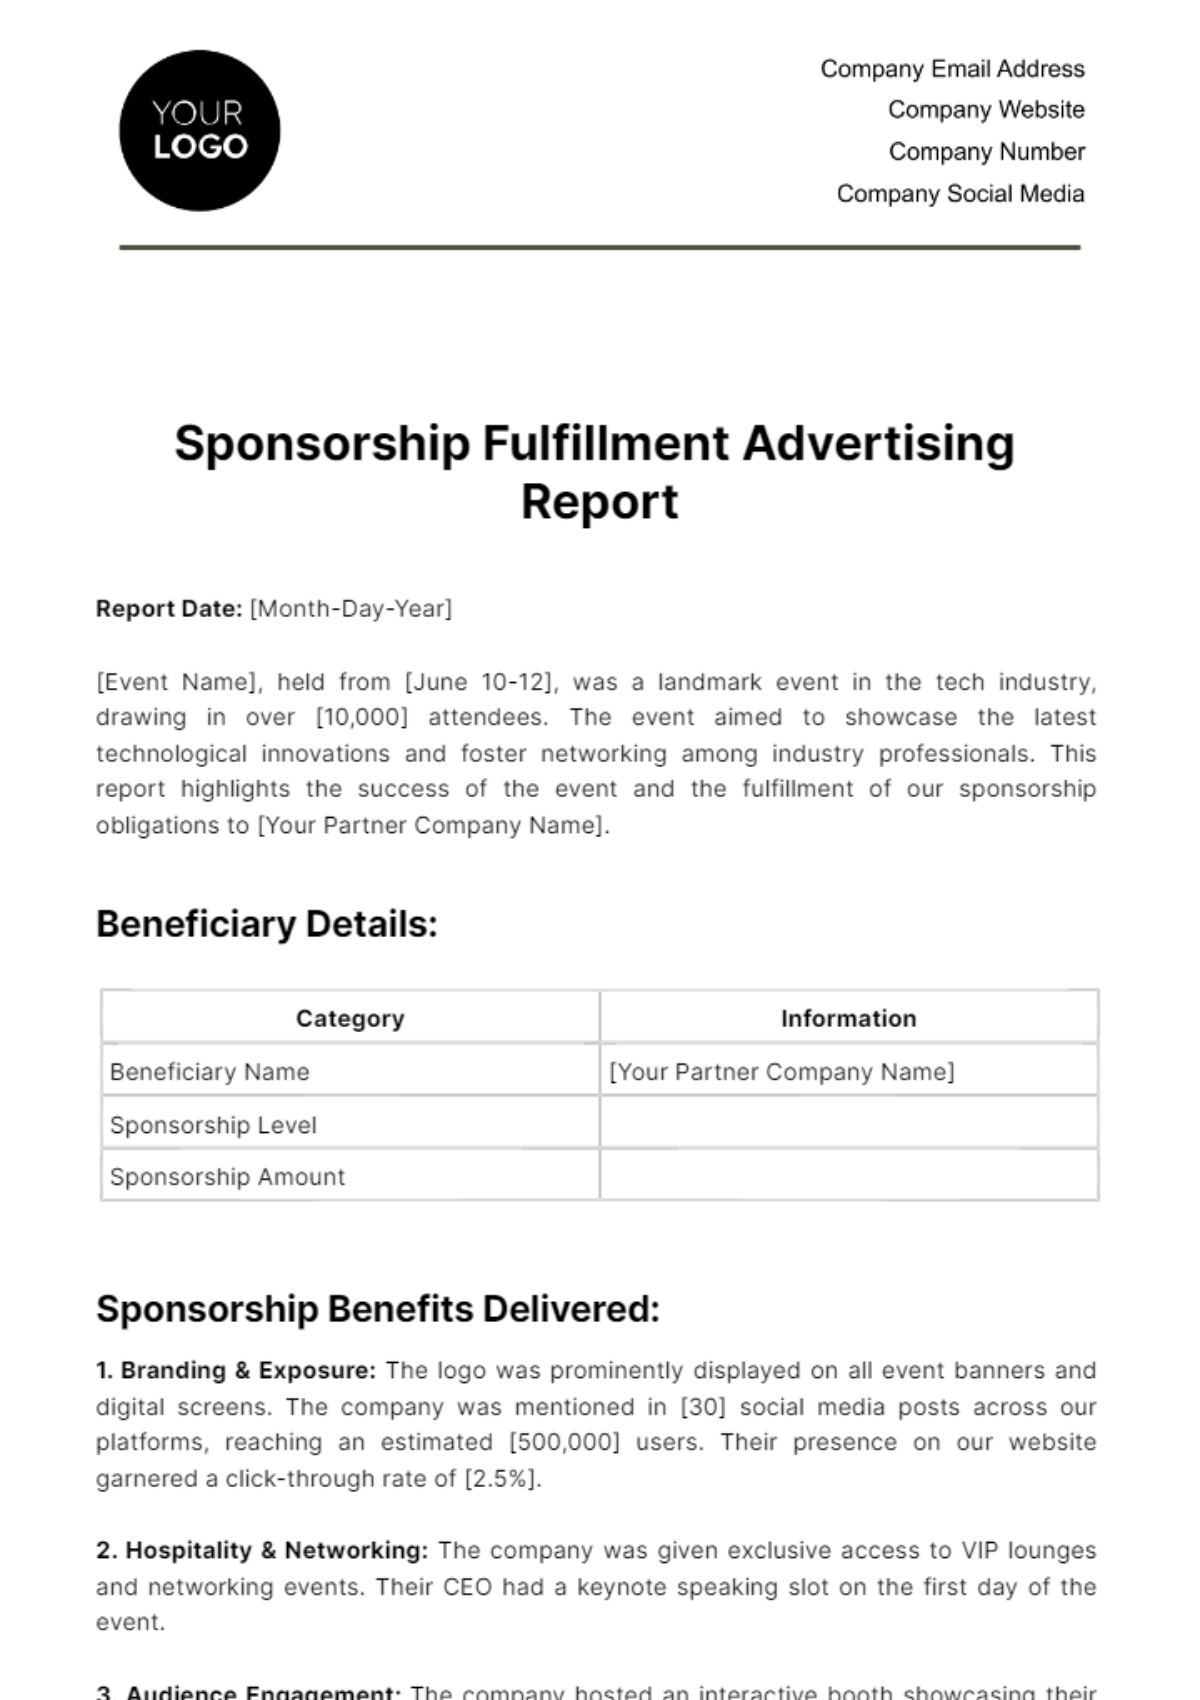 Free Sponsorship Fulfillment Advertising Report Template